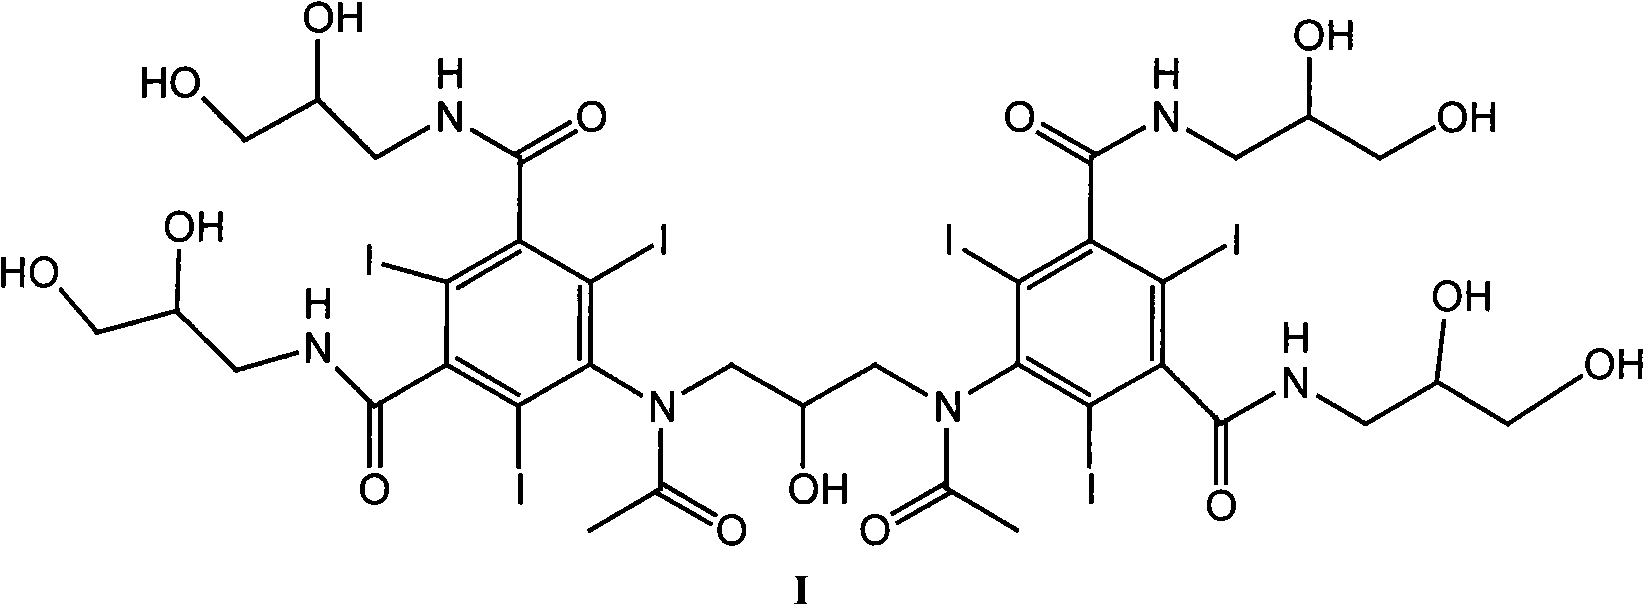 Purification process for Iodixanol